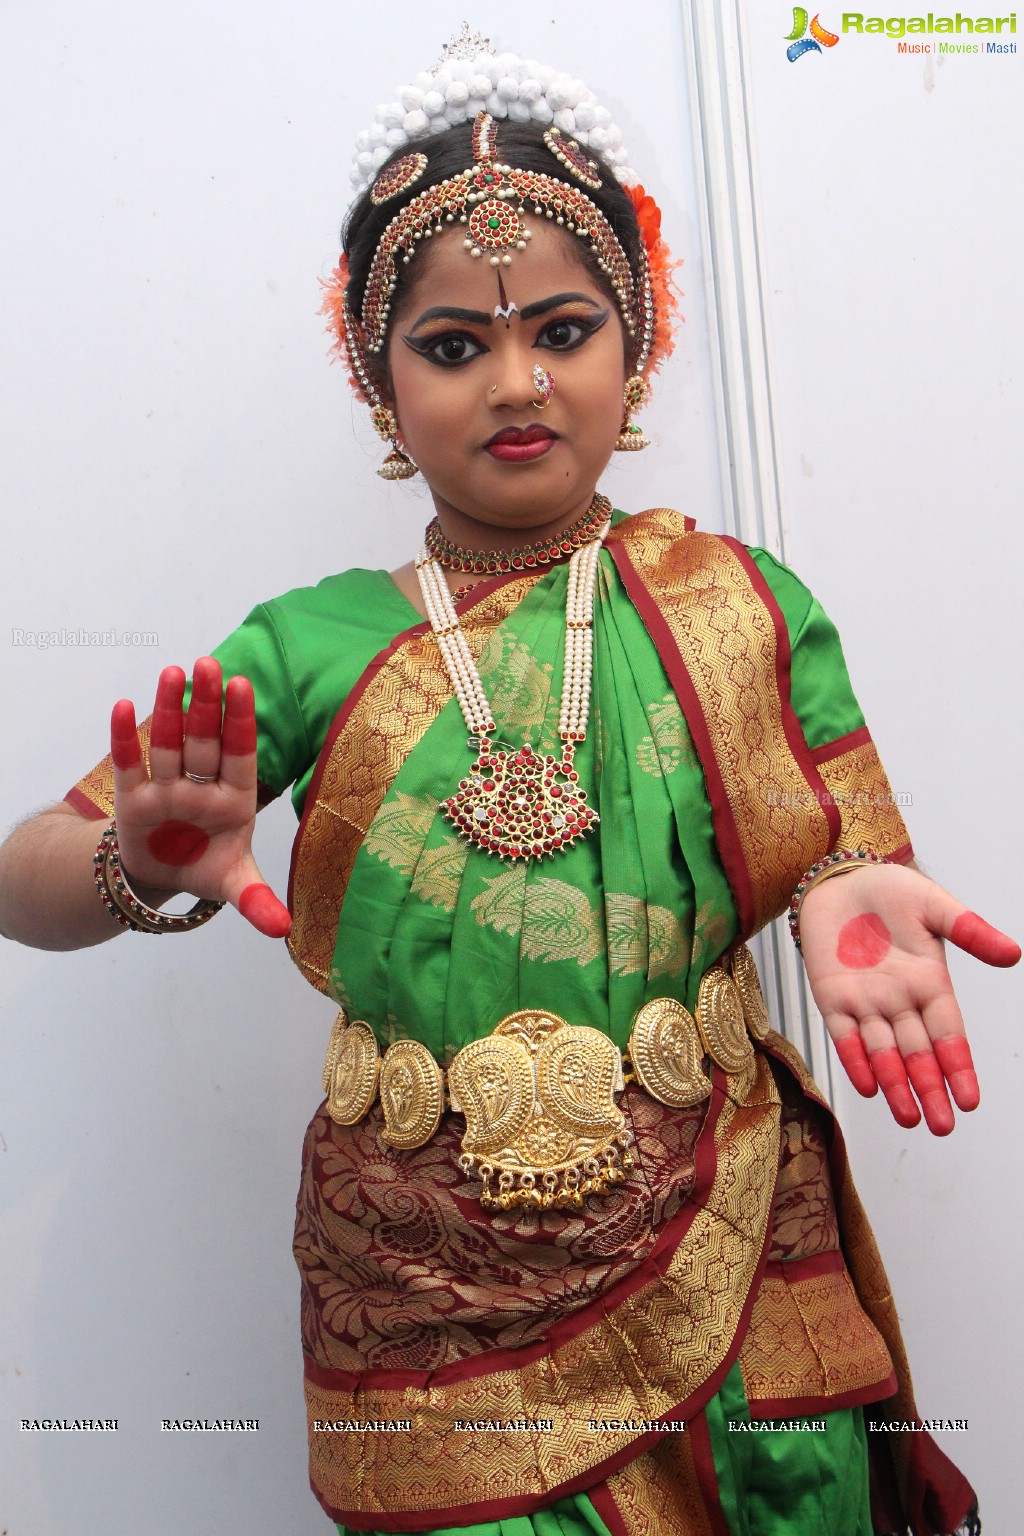 Sakshi Women's Day Celebrations 2015